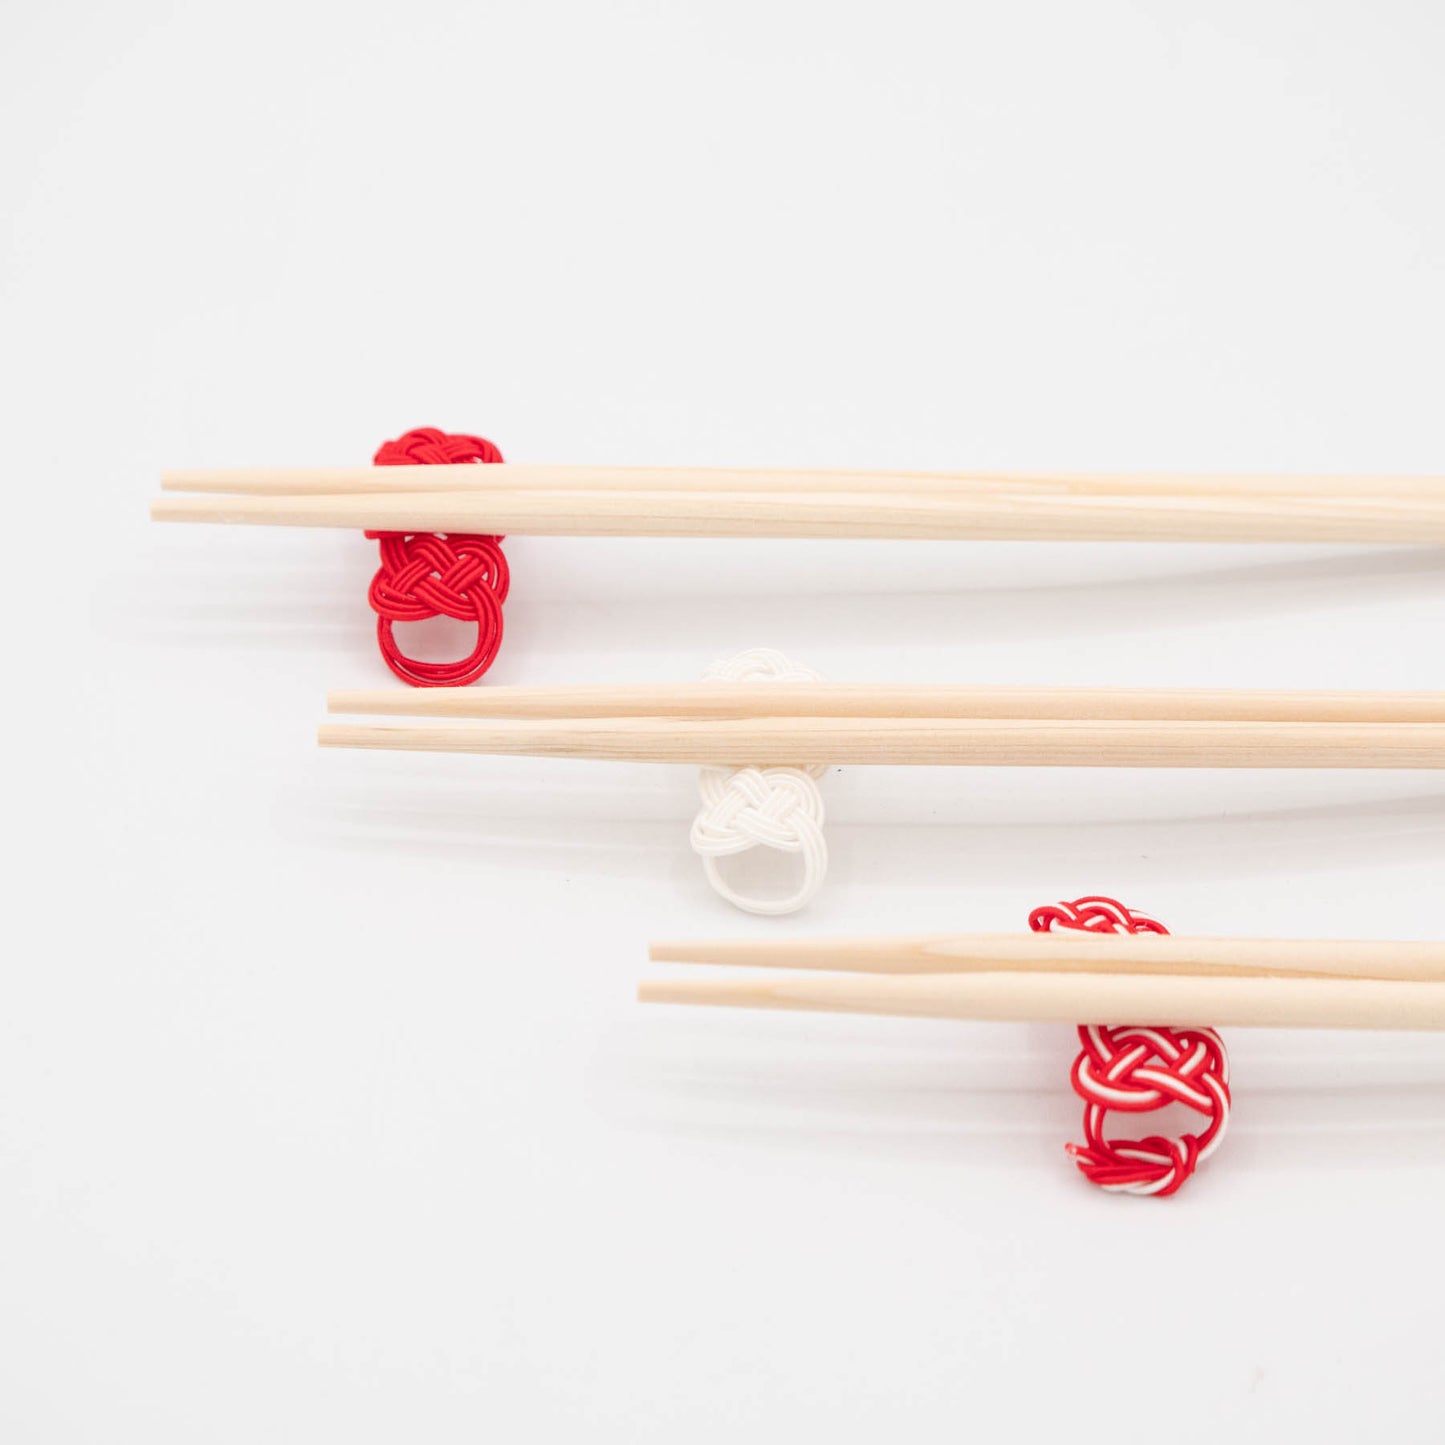 Medetaya Modern - Chopsticks 3pcs Set - Red & White